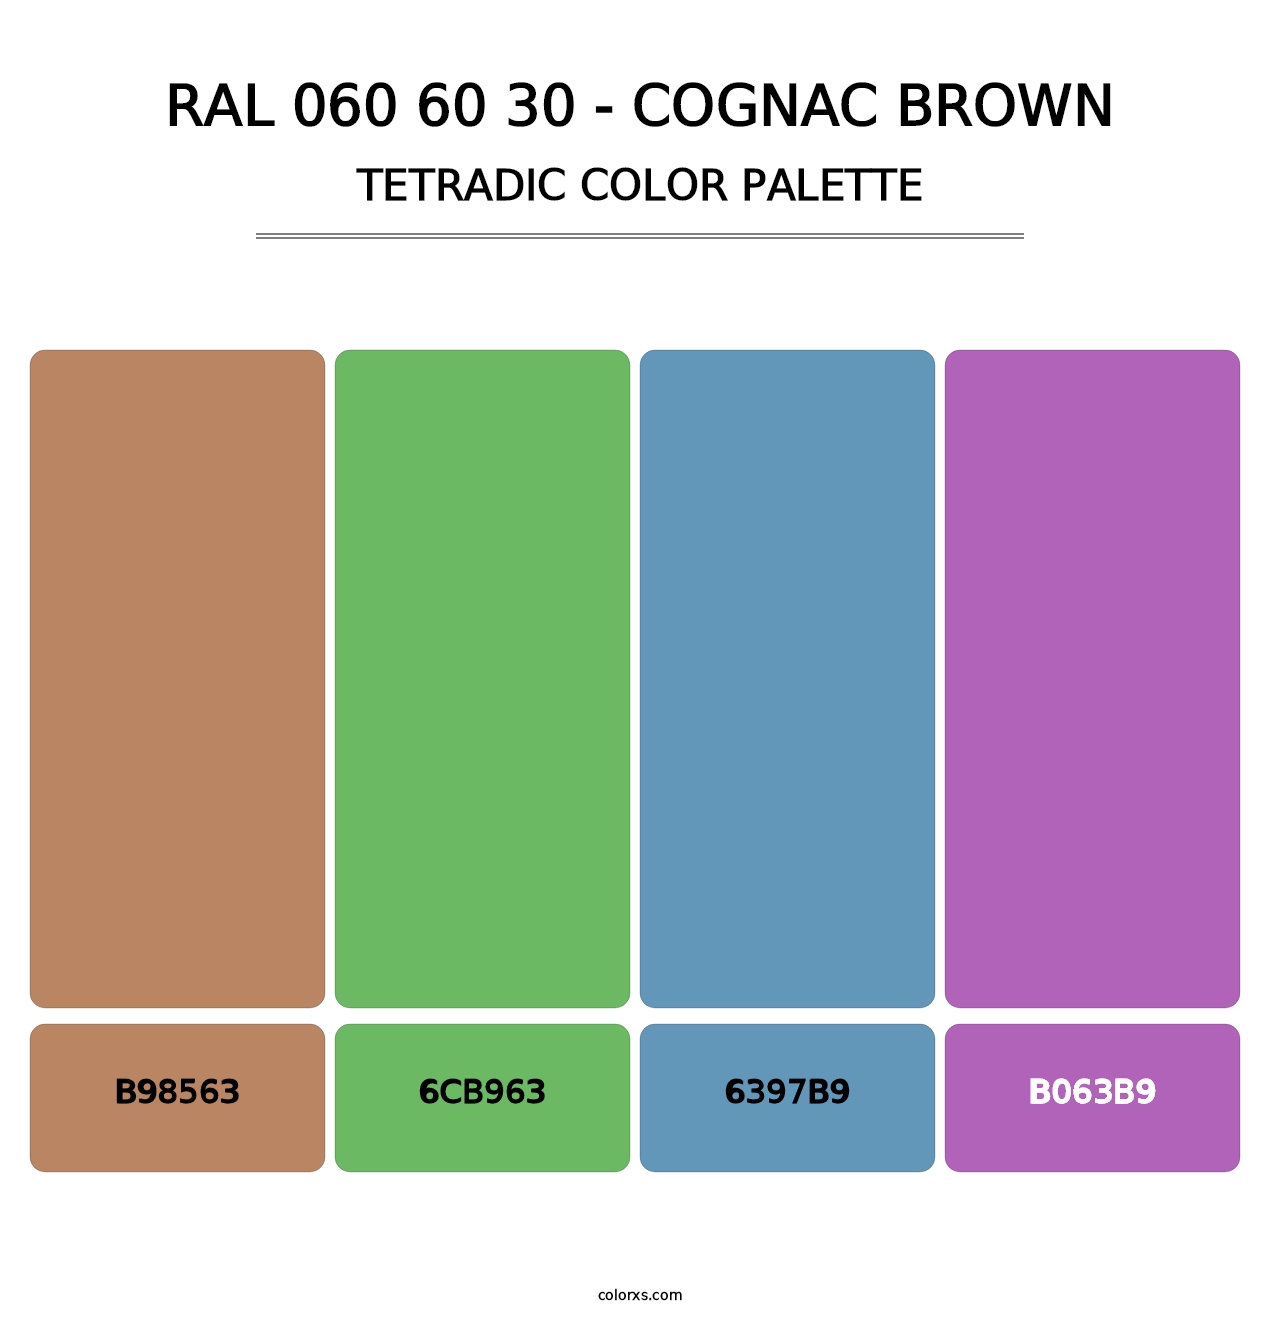 RAL 060 60 30 - Cognac Brown - Tetradic Color Palette